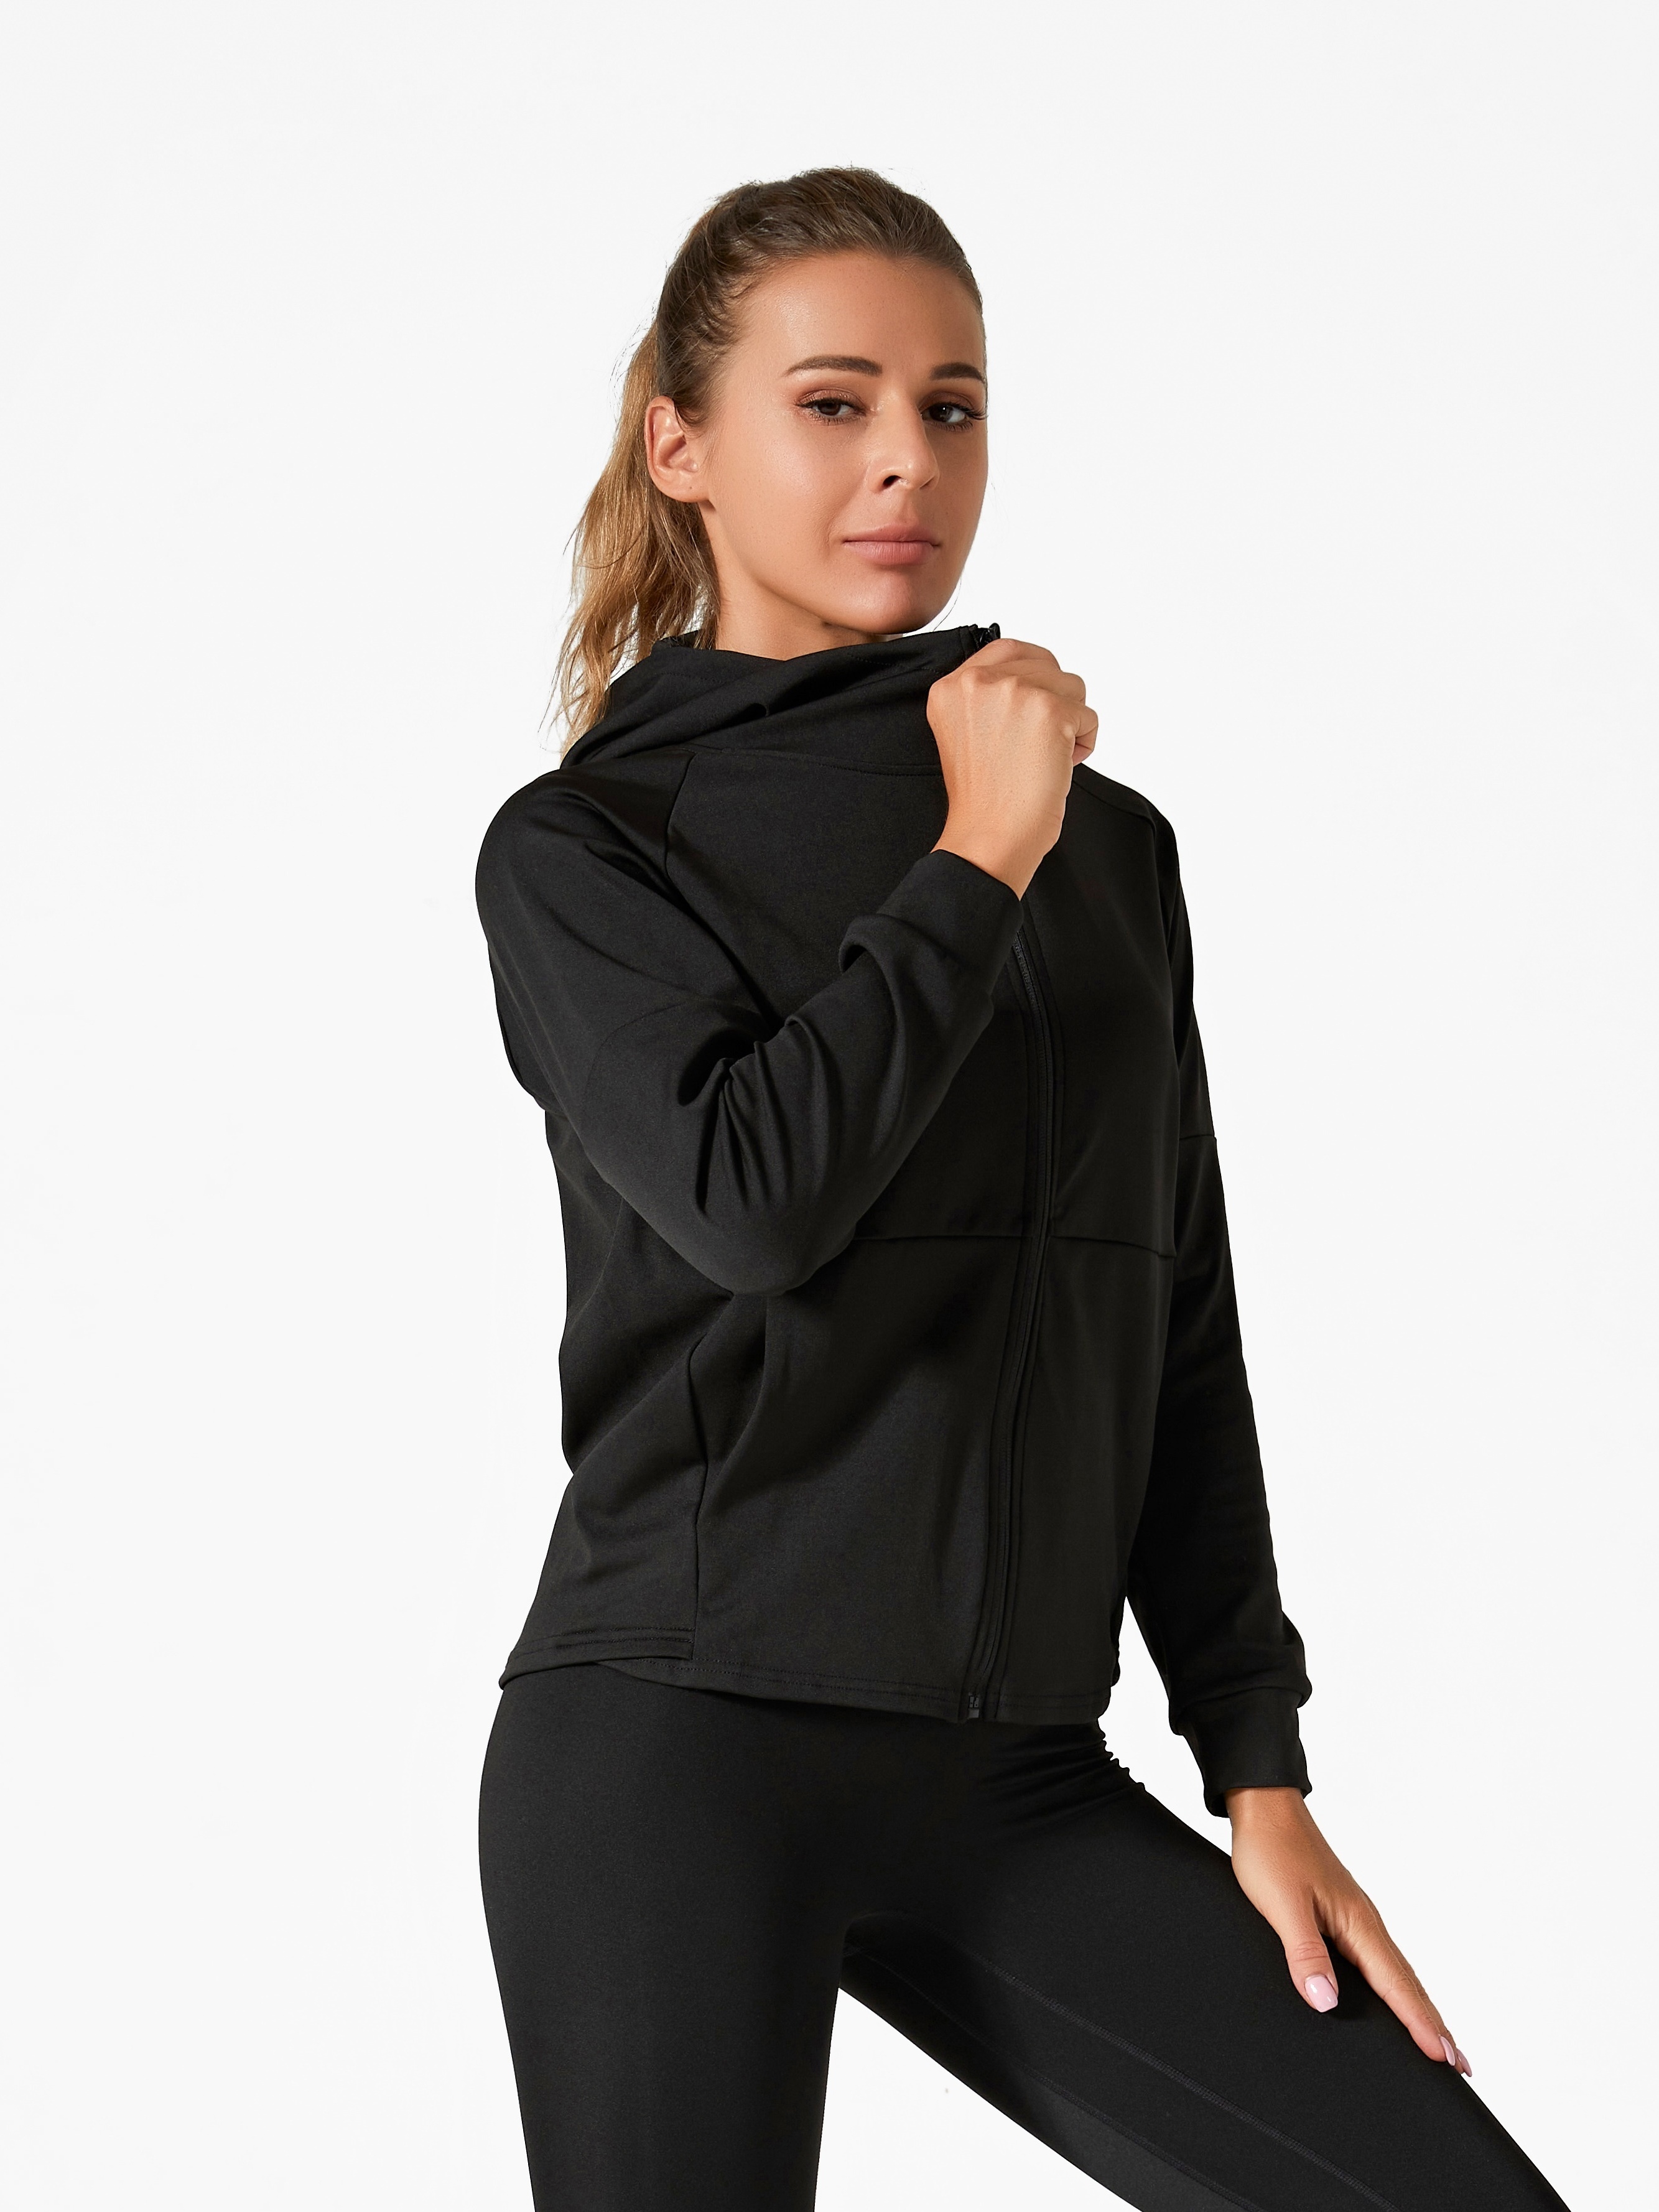 Loveuself Women's Full-Zip Yoga Jacket Running Track Jacket with